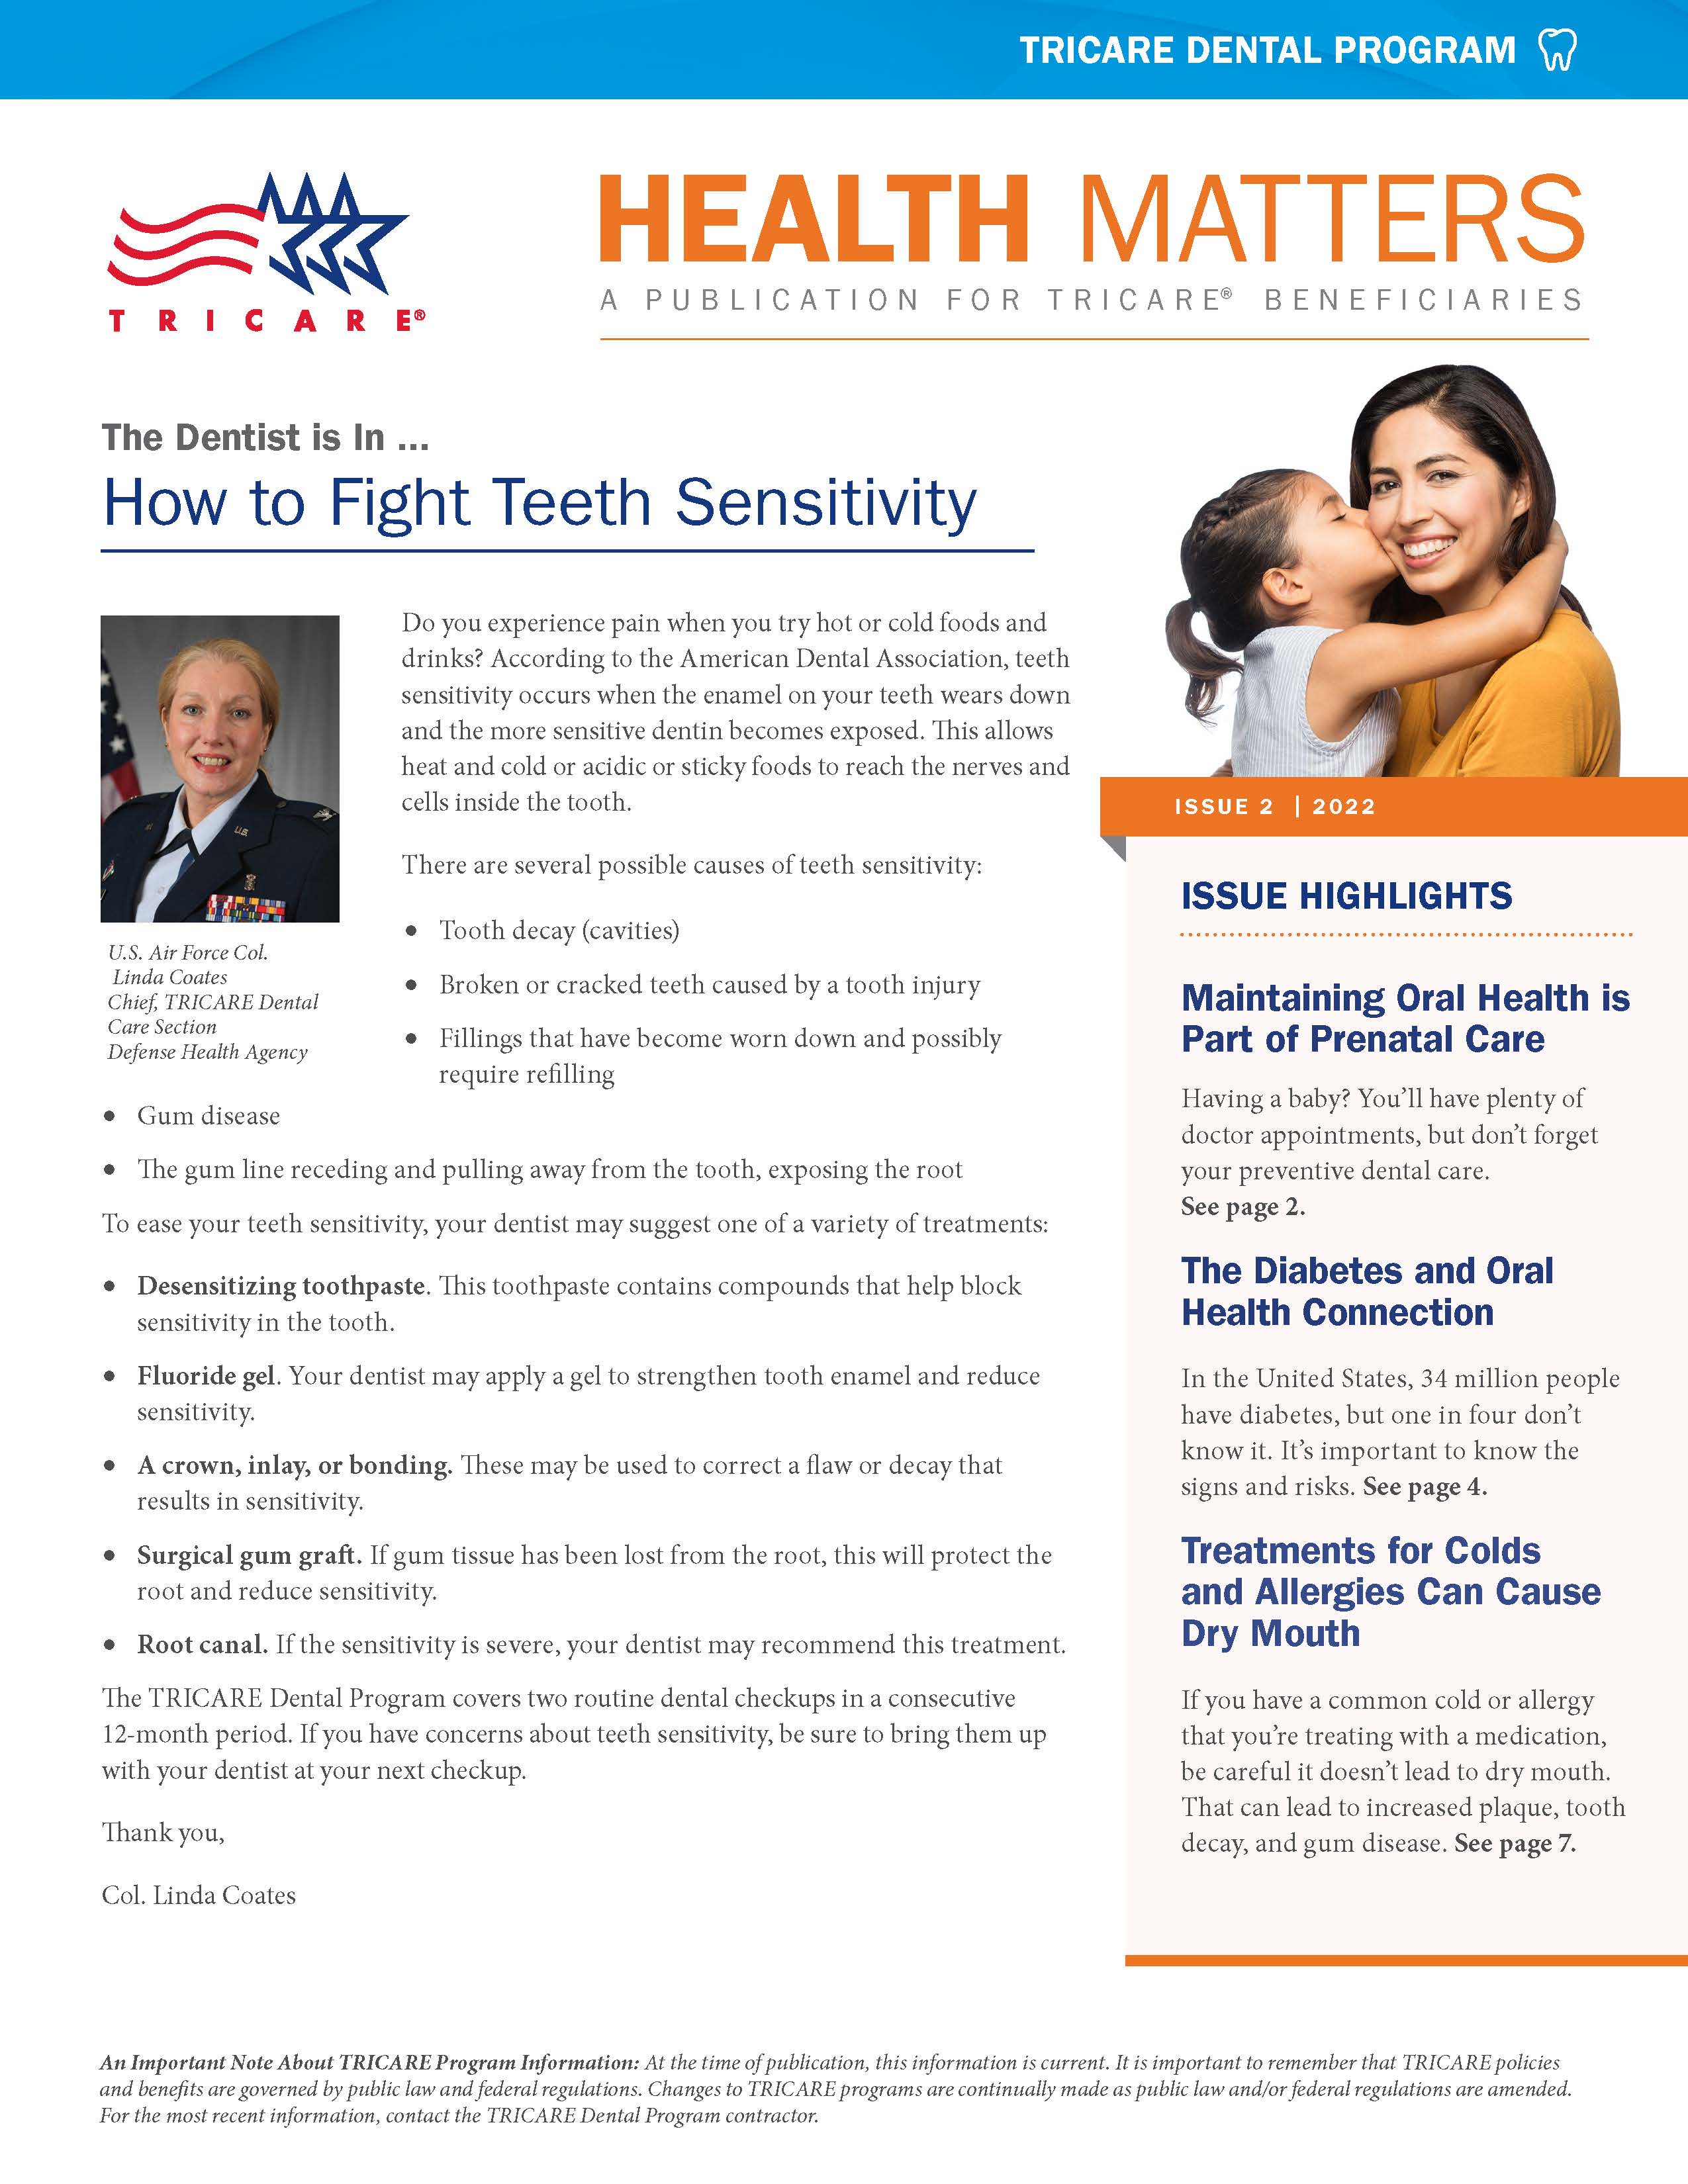 How to Fight Teeth Sensitivity